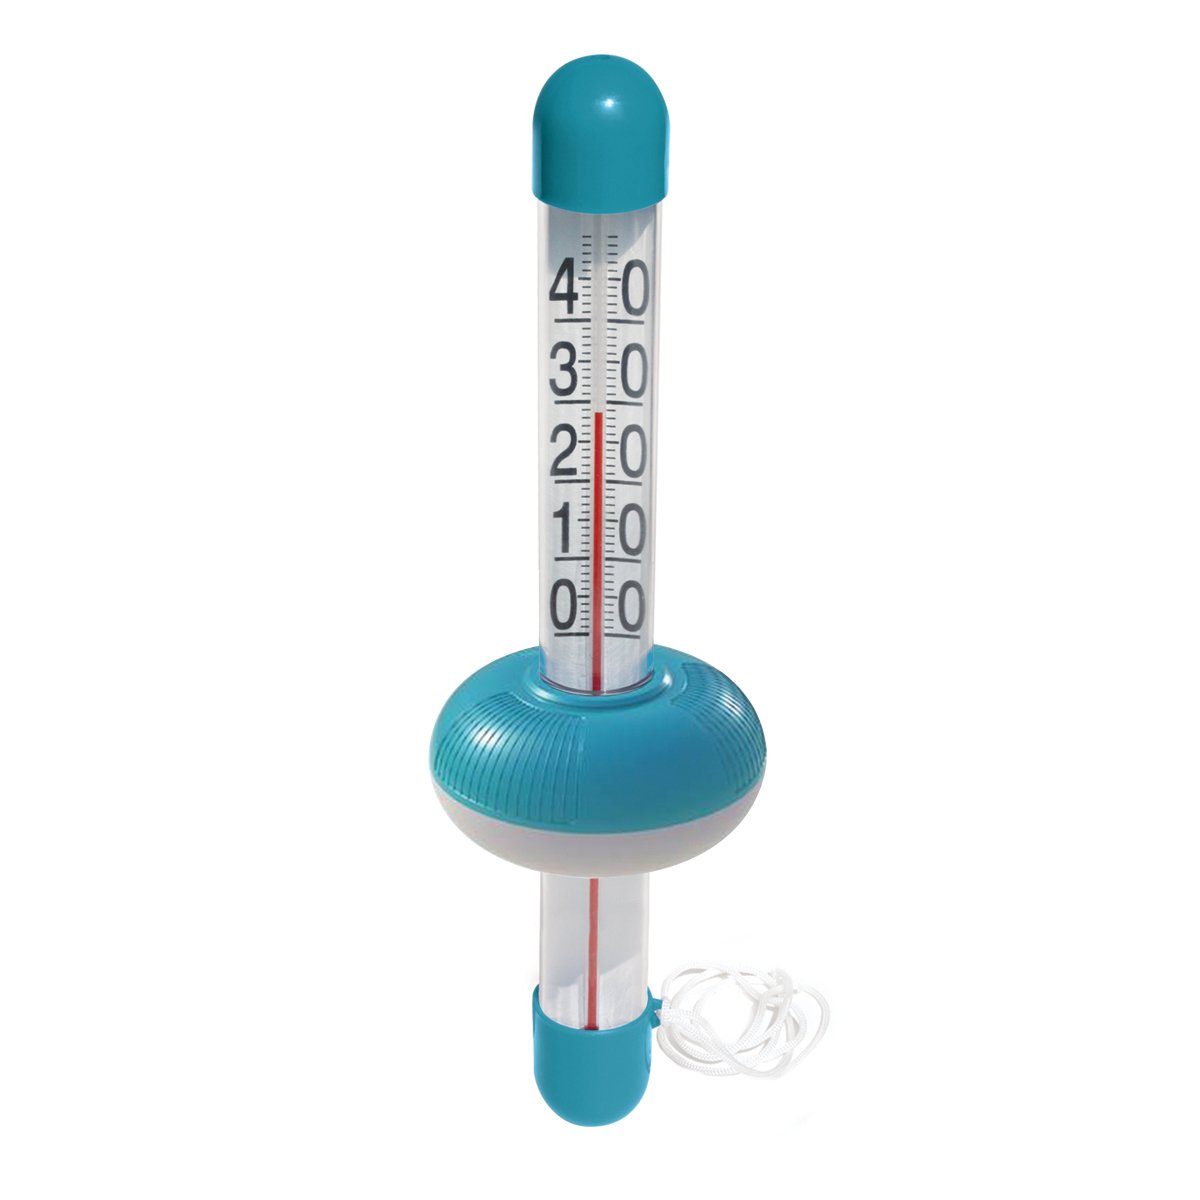 Poolomio Badethermometer Jumbo Poolthermometer, Thermometer, Wasserthermometer